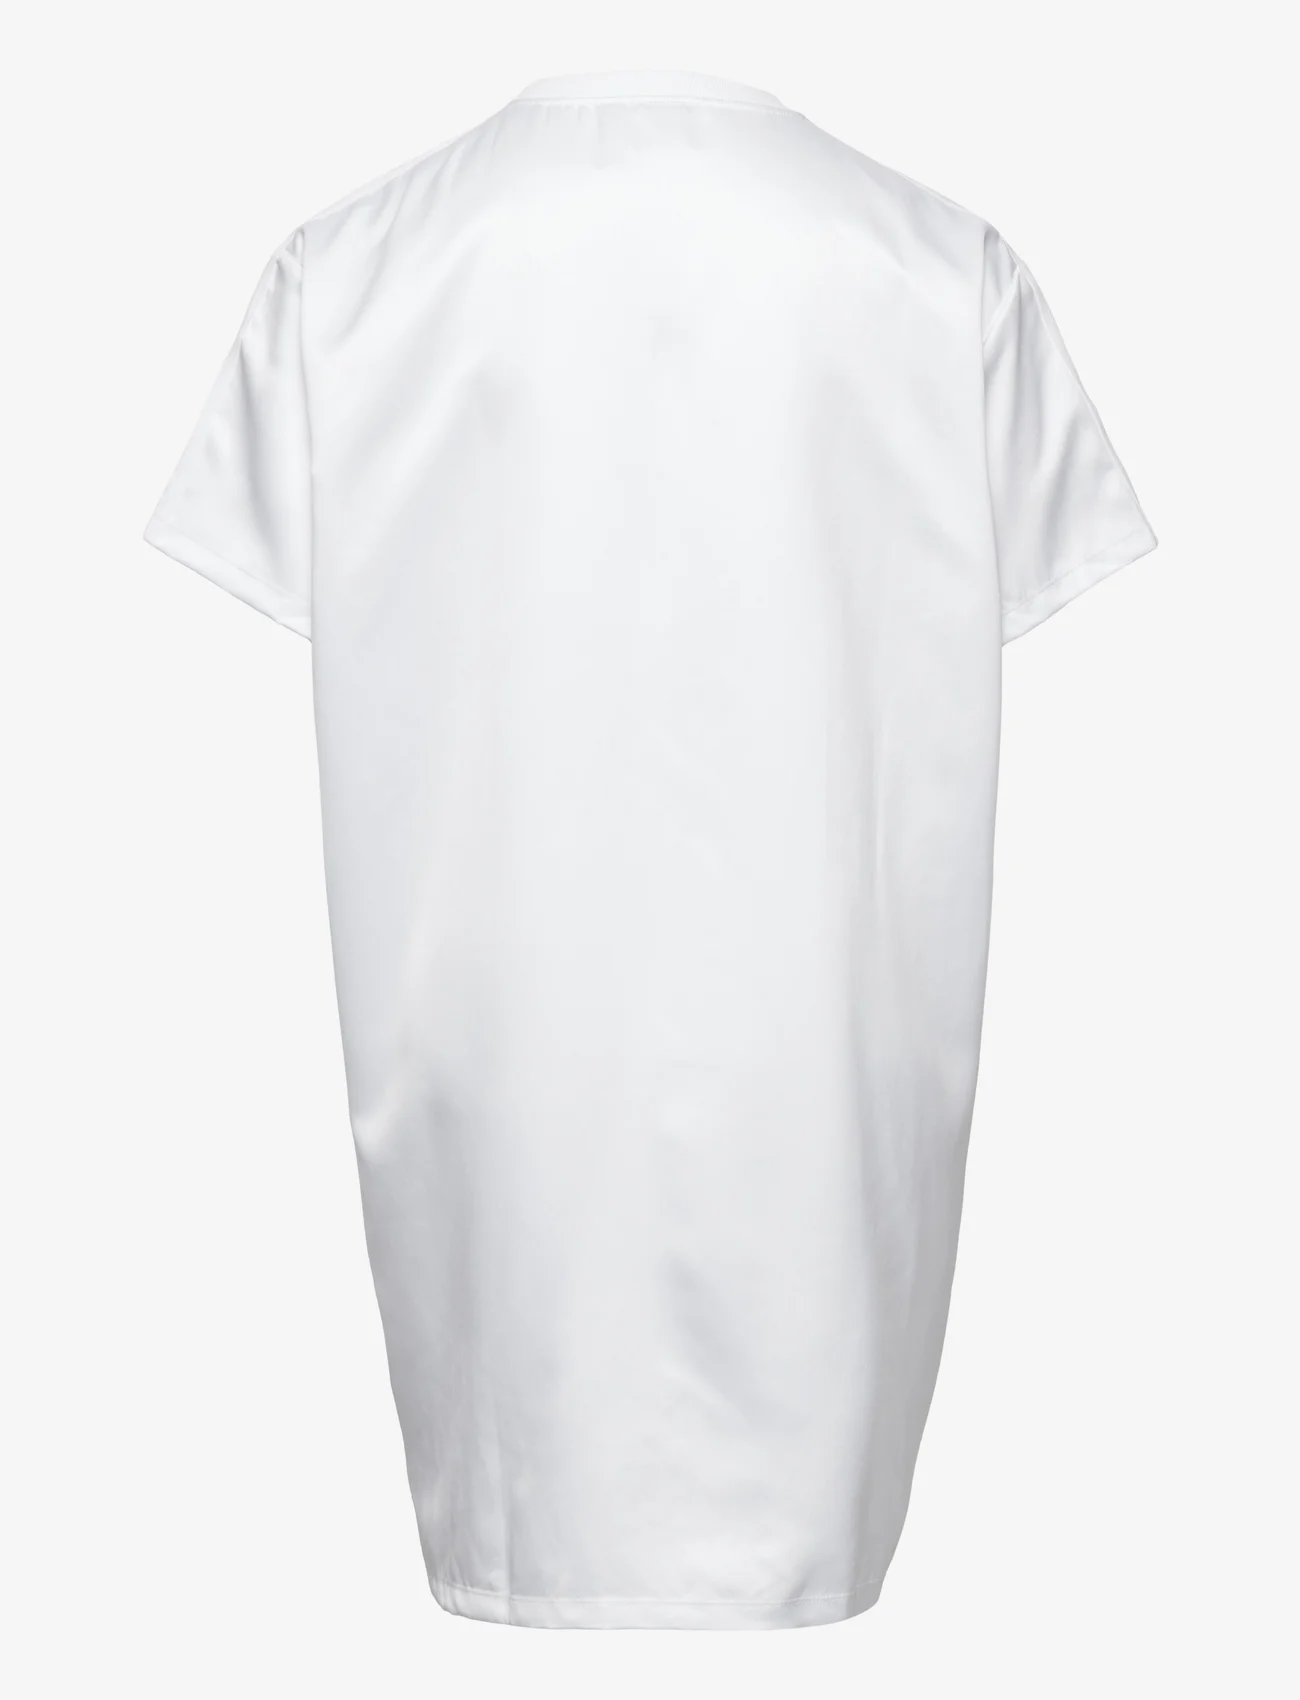 adidas Originals - TEE DRESS - t-shirtklänningar - white - 1